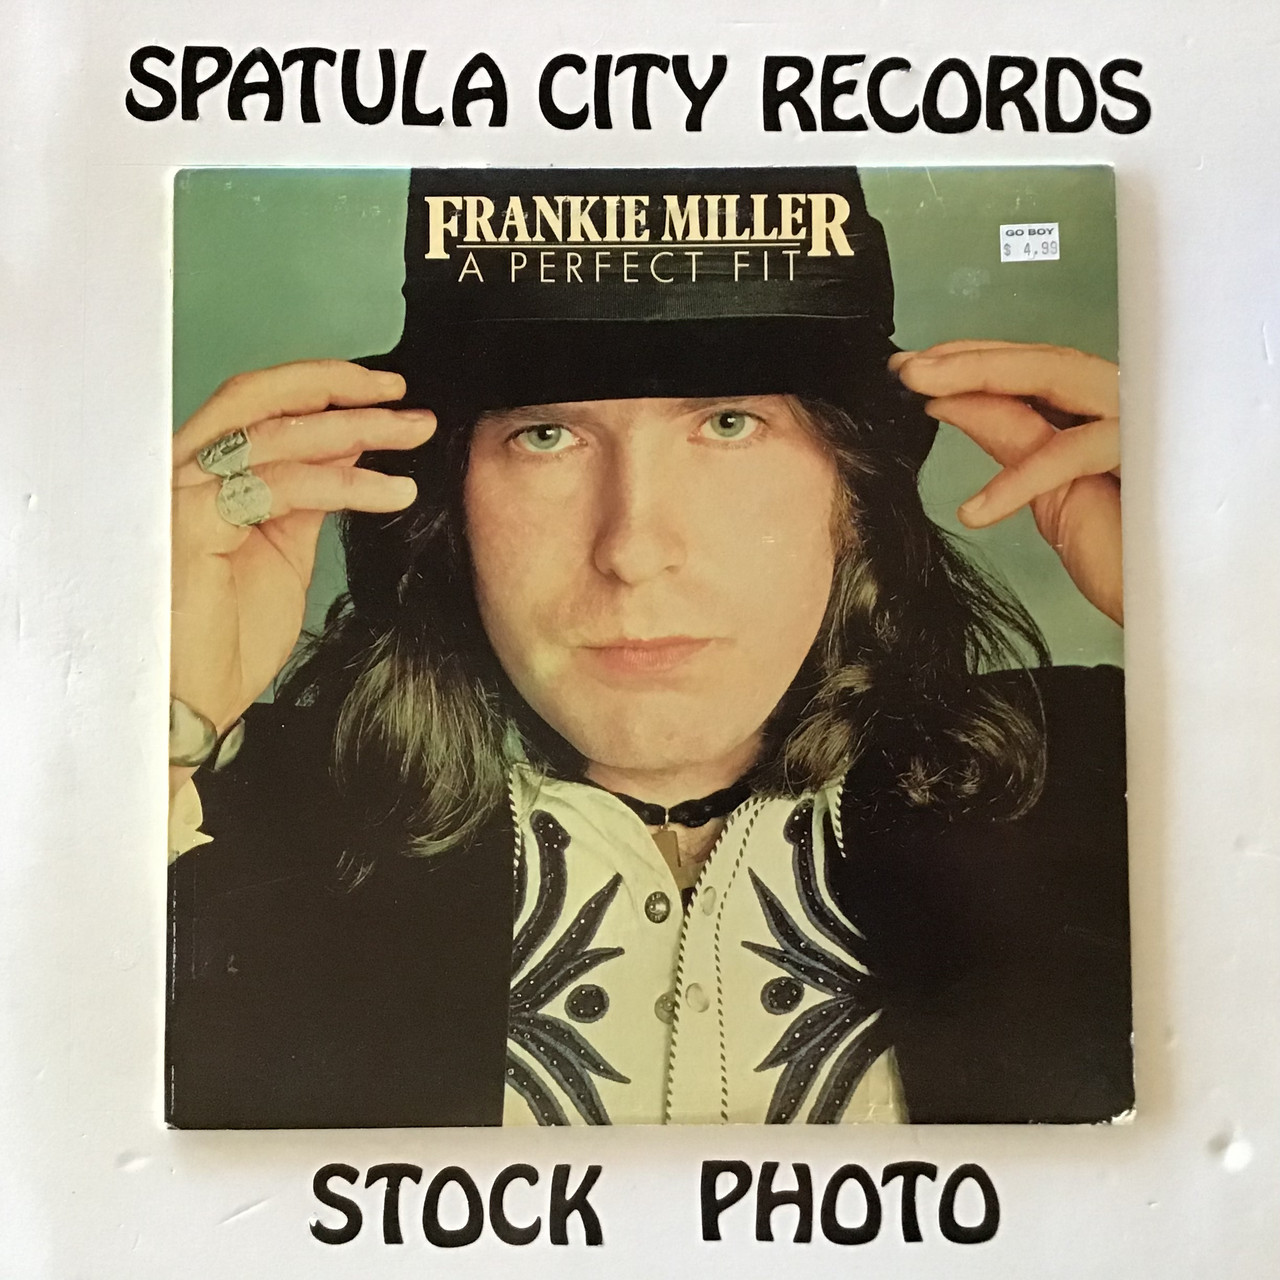 Frankie Miller - A Perfect Fit - vinyl record LP